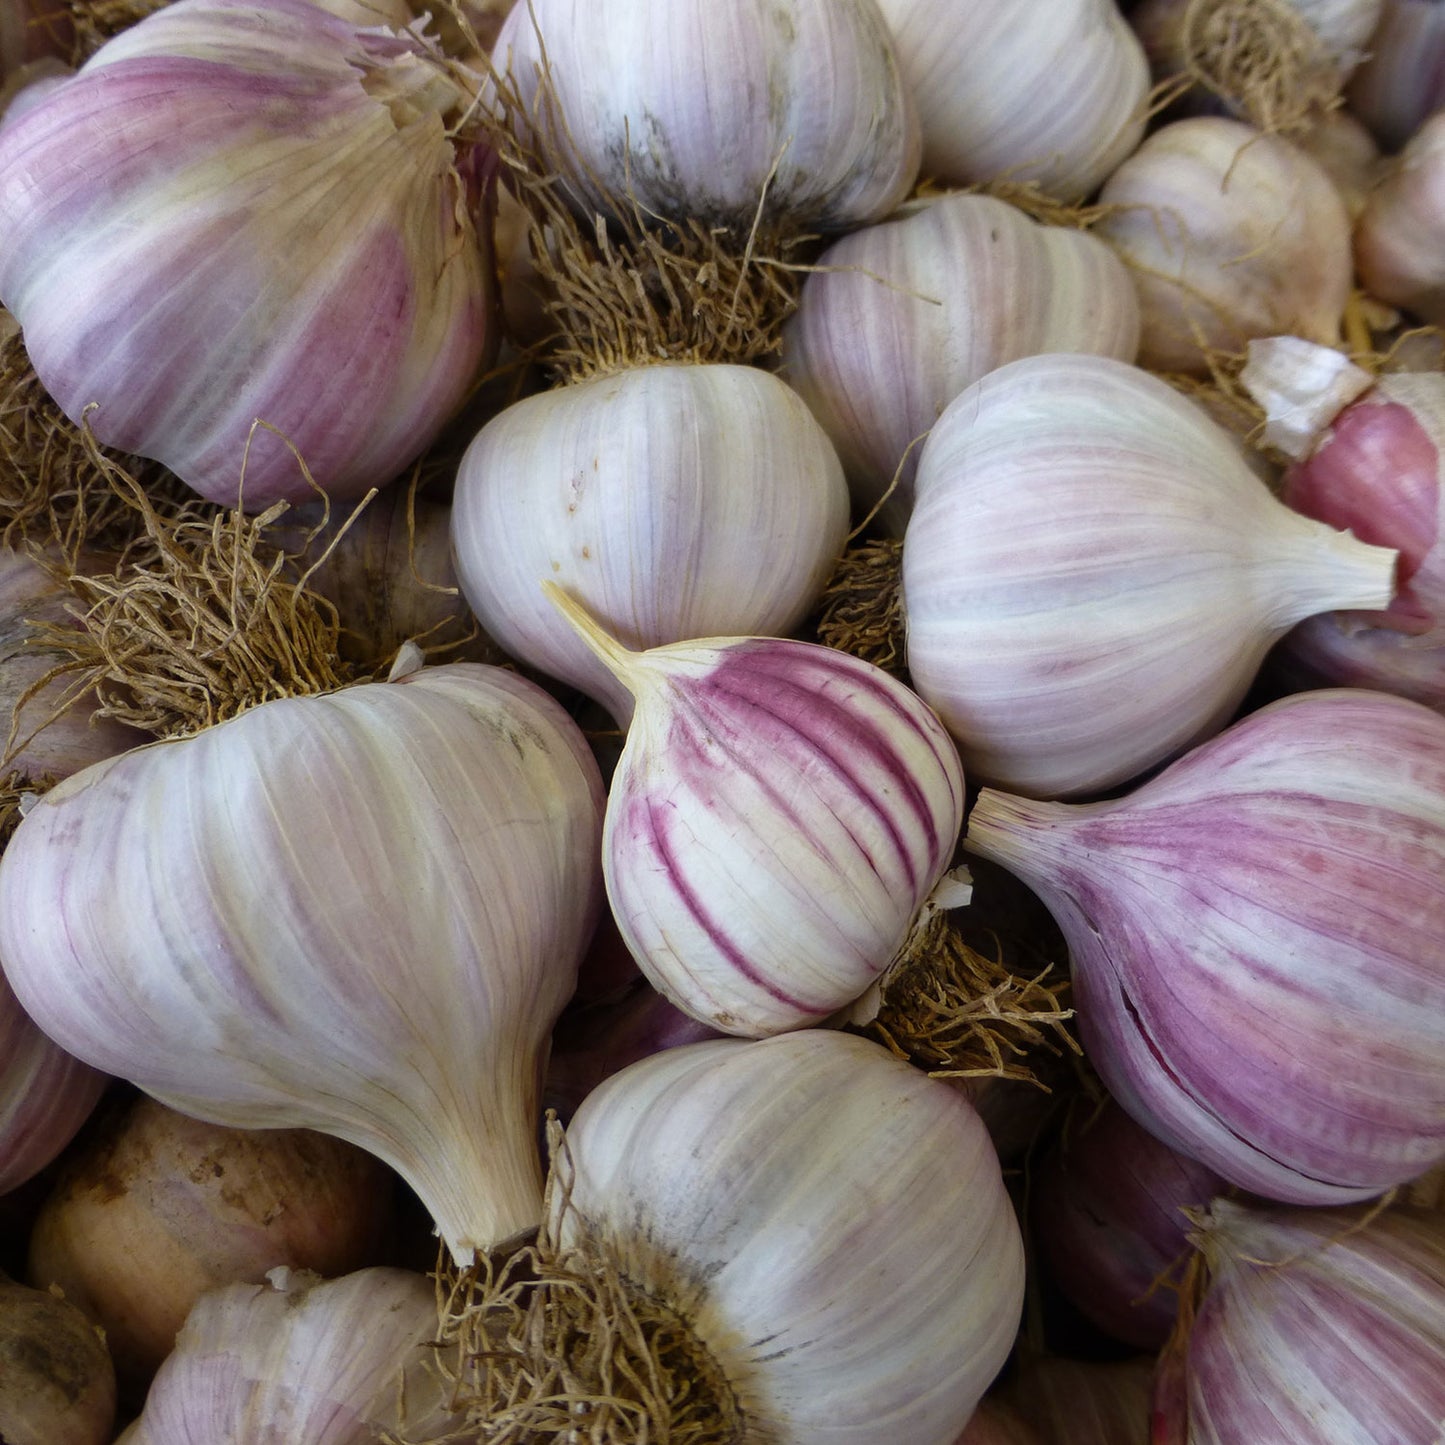 Purple queen garlic